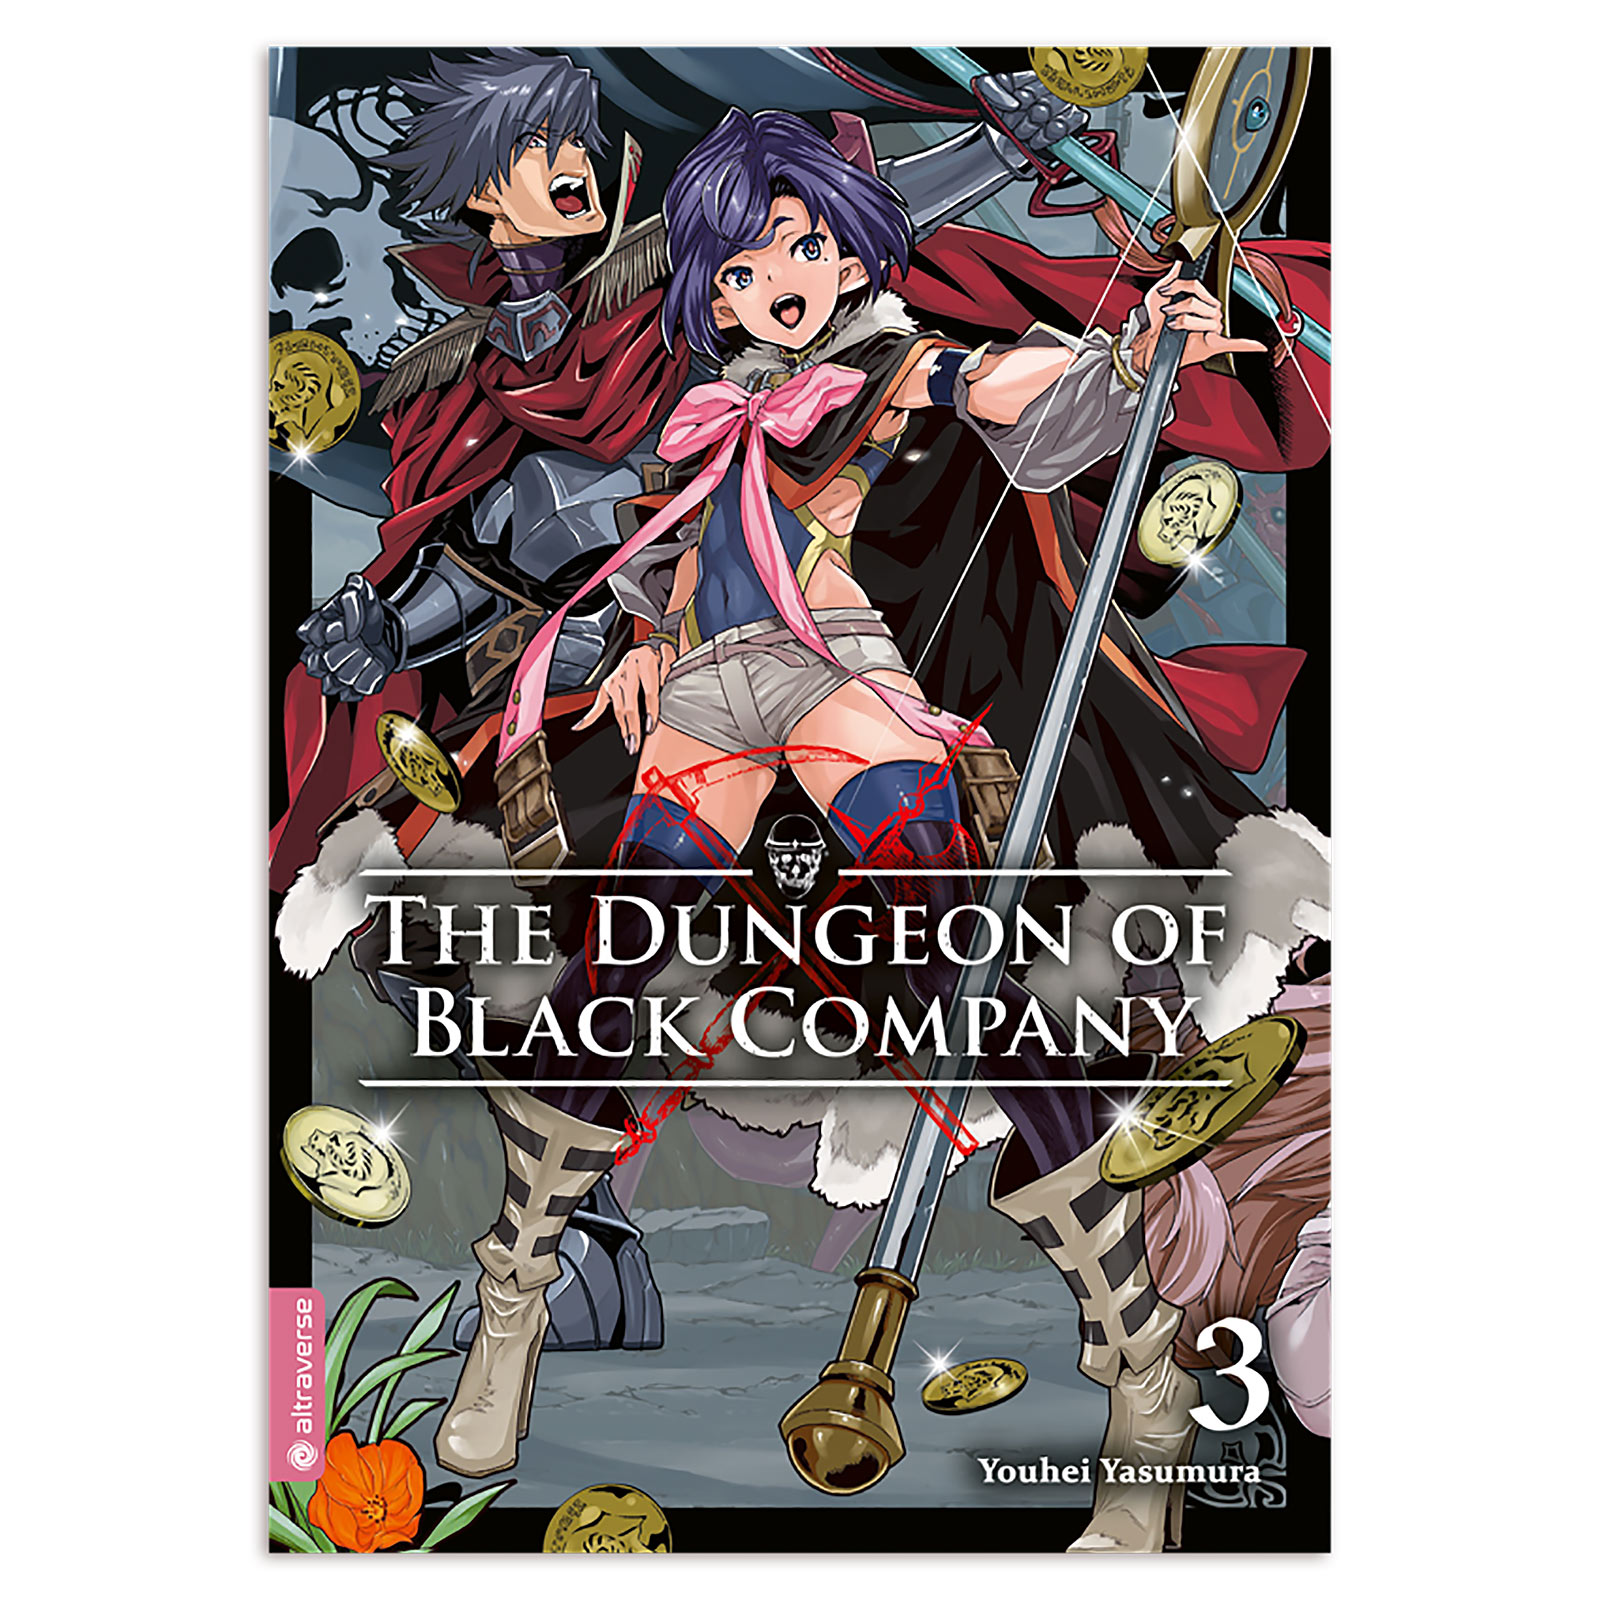 The Dungeon of Black Company - Manga Volume 3